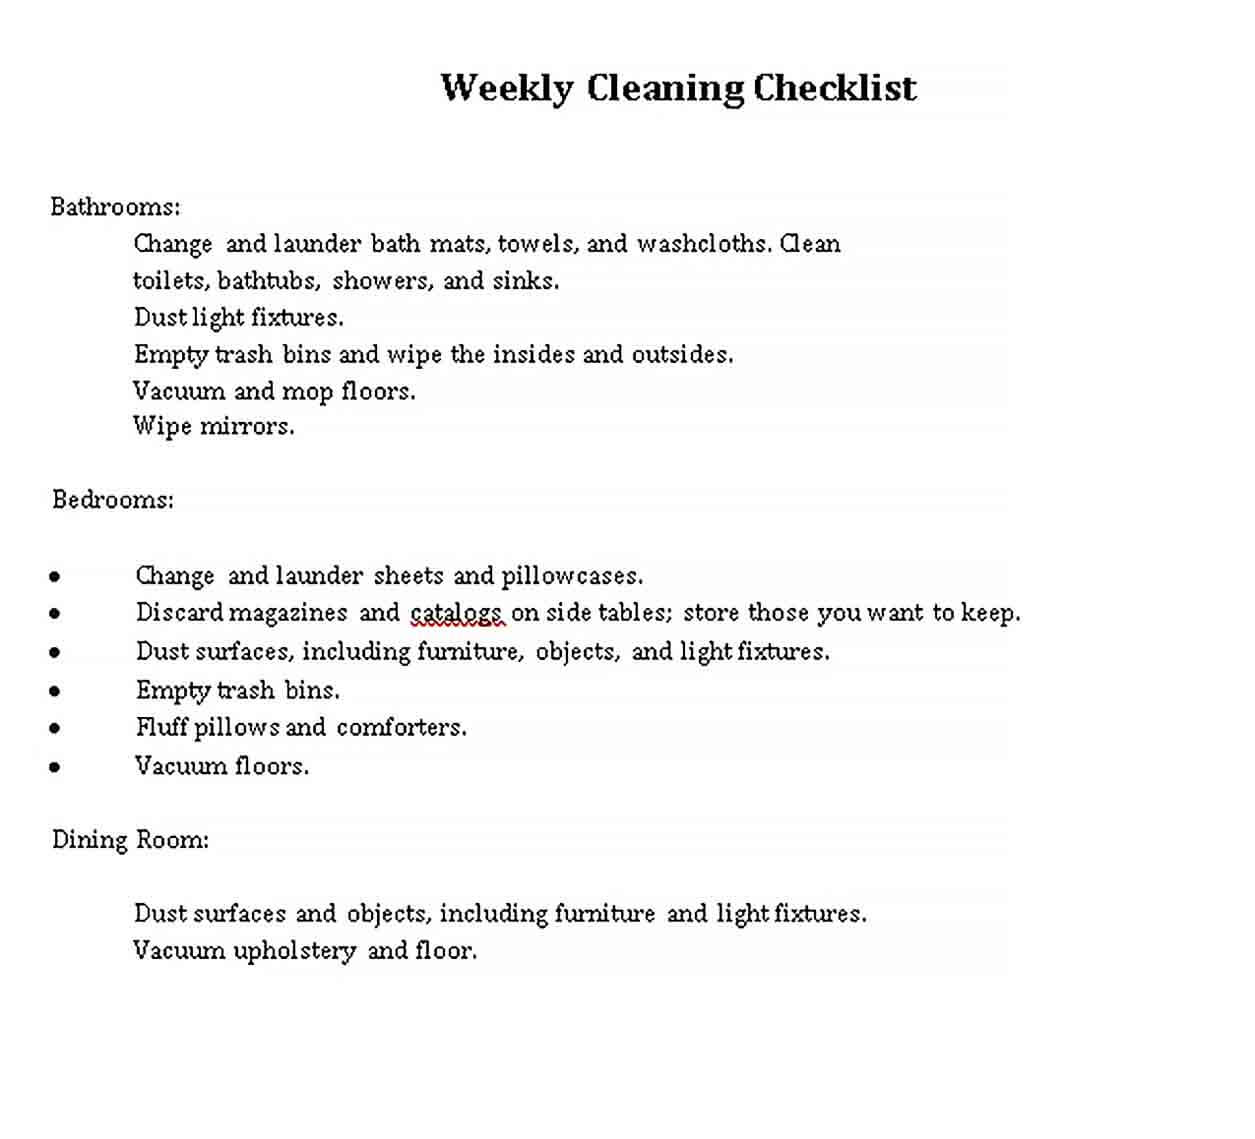 Sample Checklist Weekly Clean PDF Format